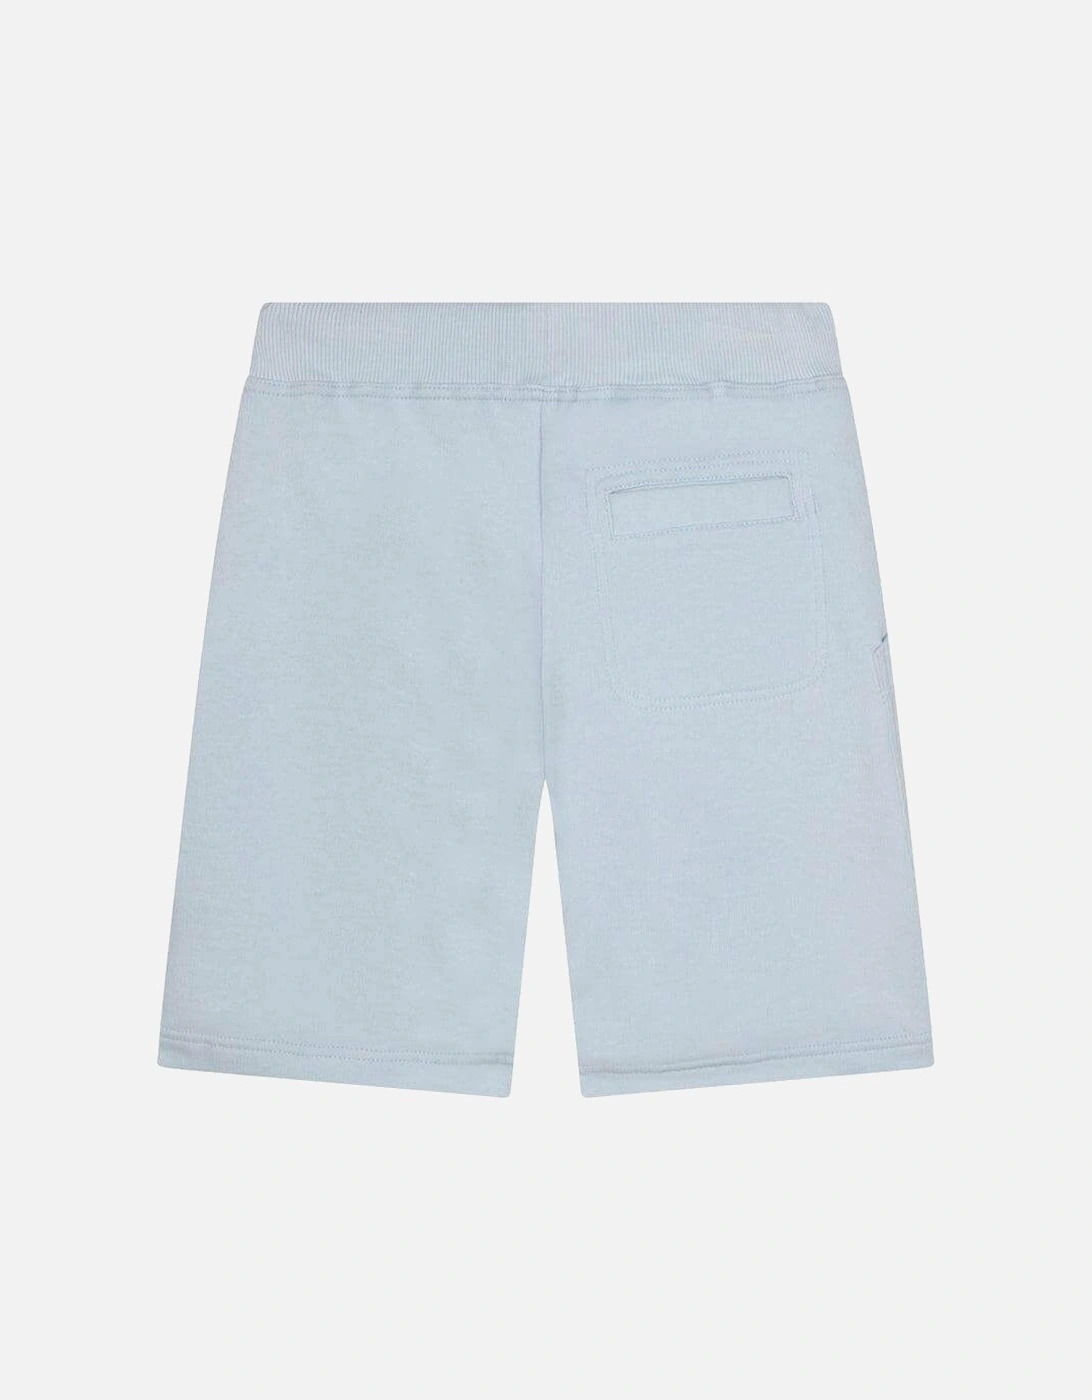 Boys Pale Blue Curb Shorts